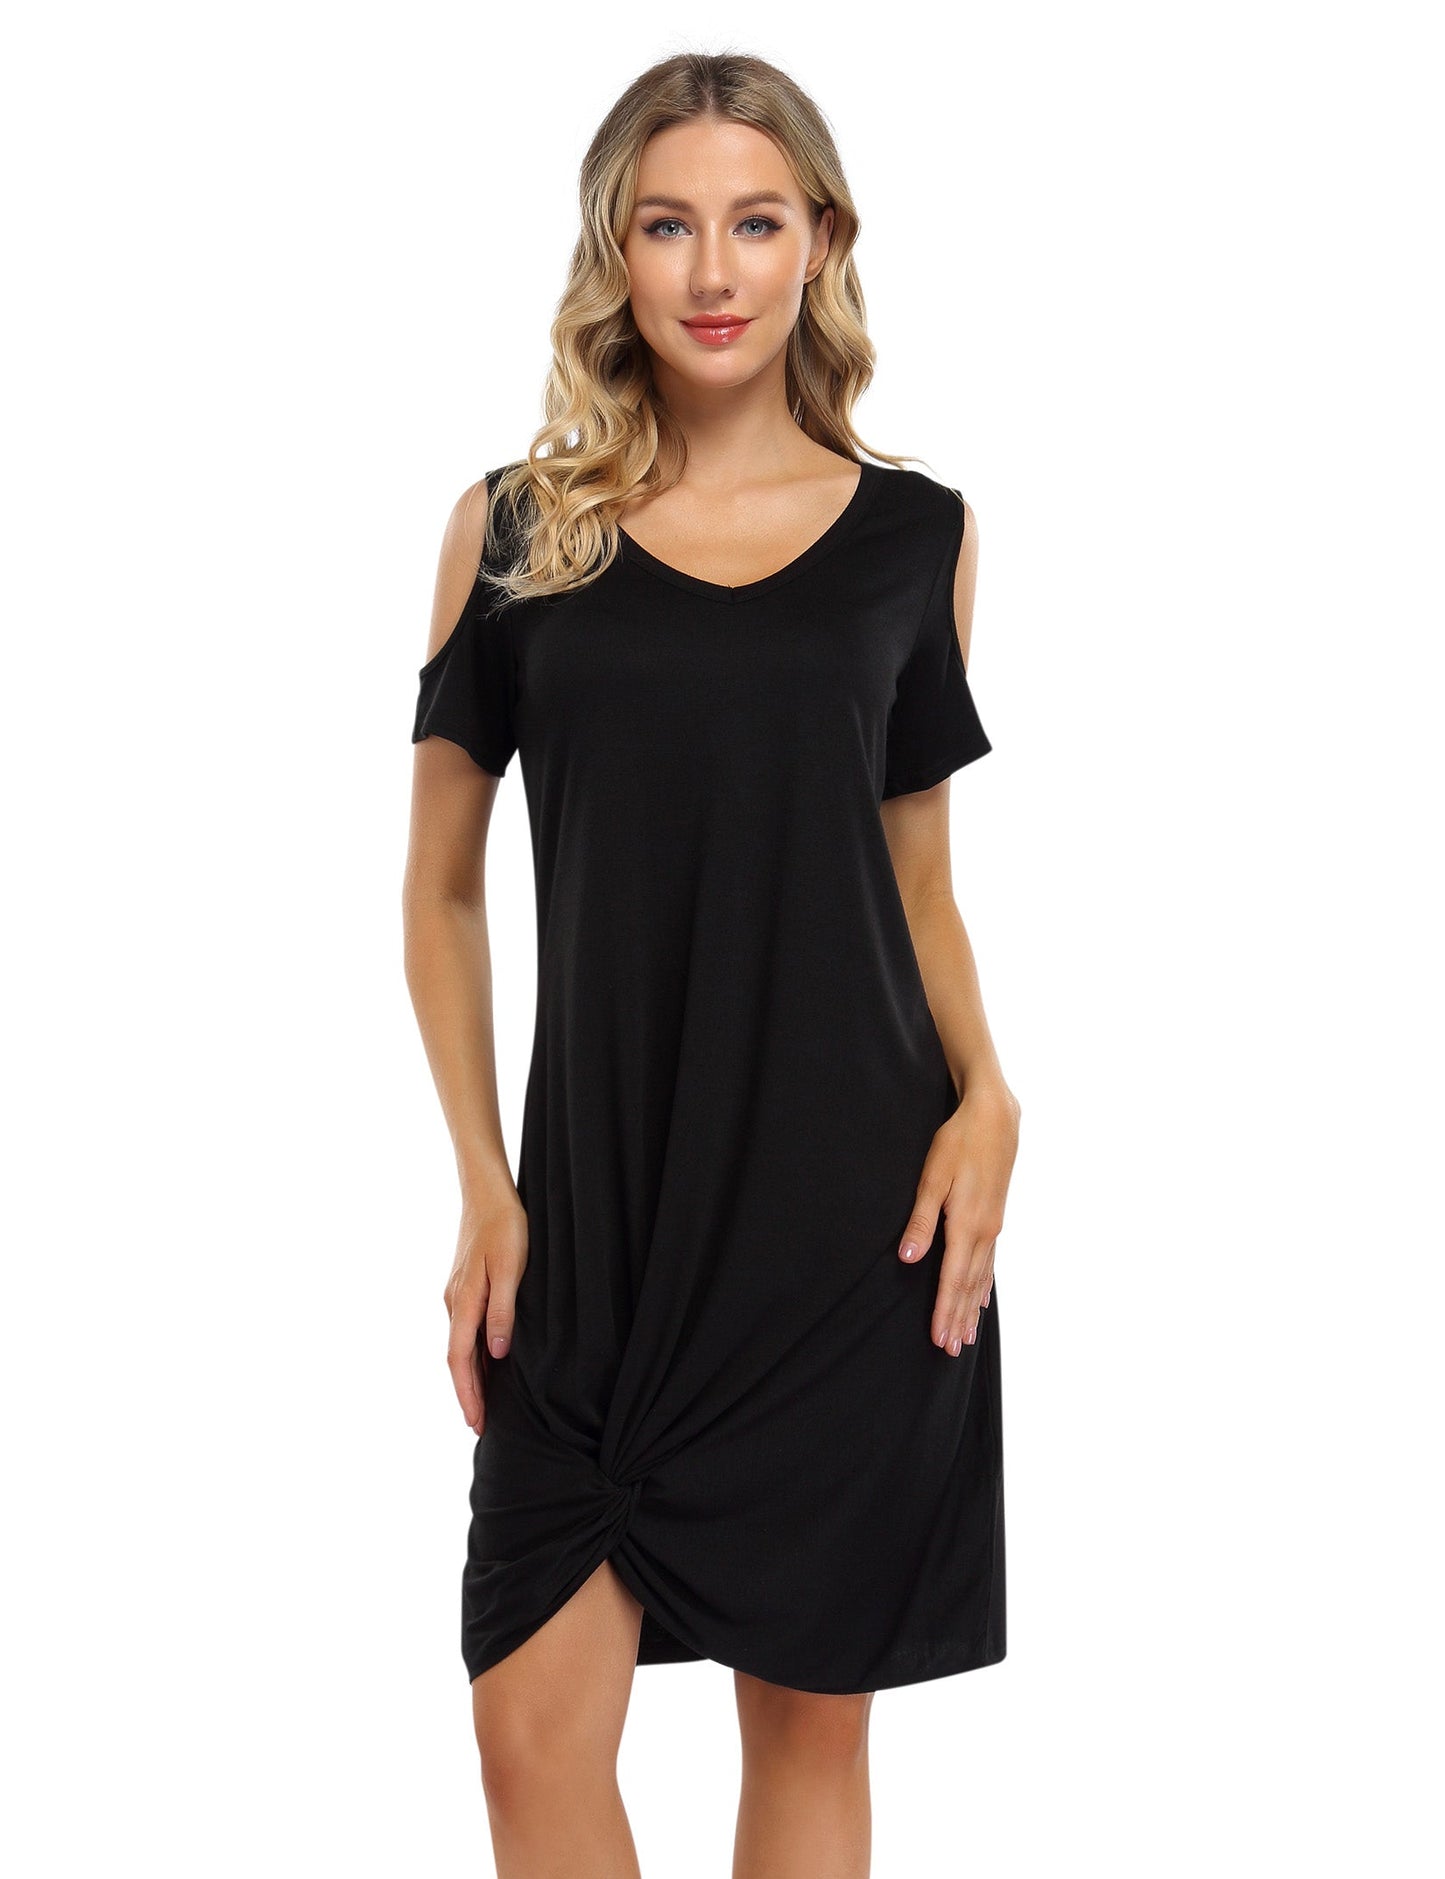 YESFASHION Women's Twist Knot T Shirt Dress Black